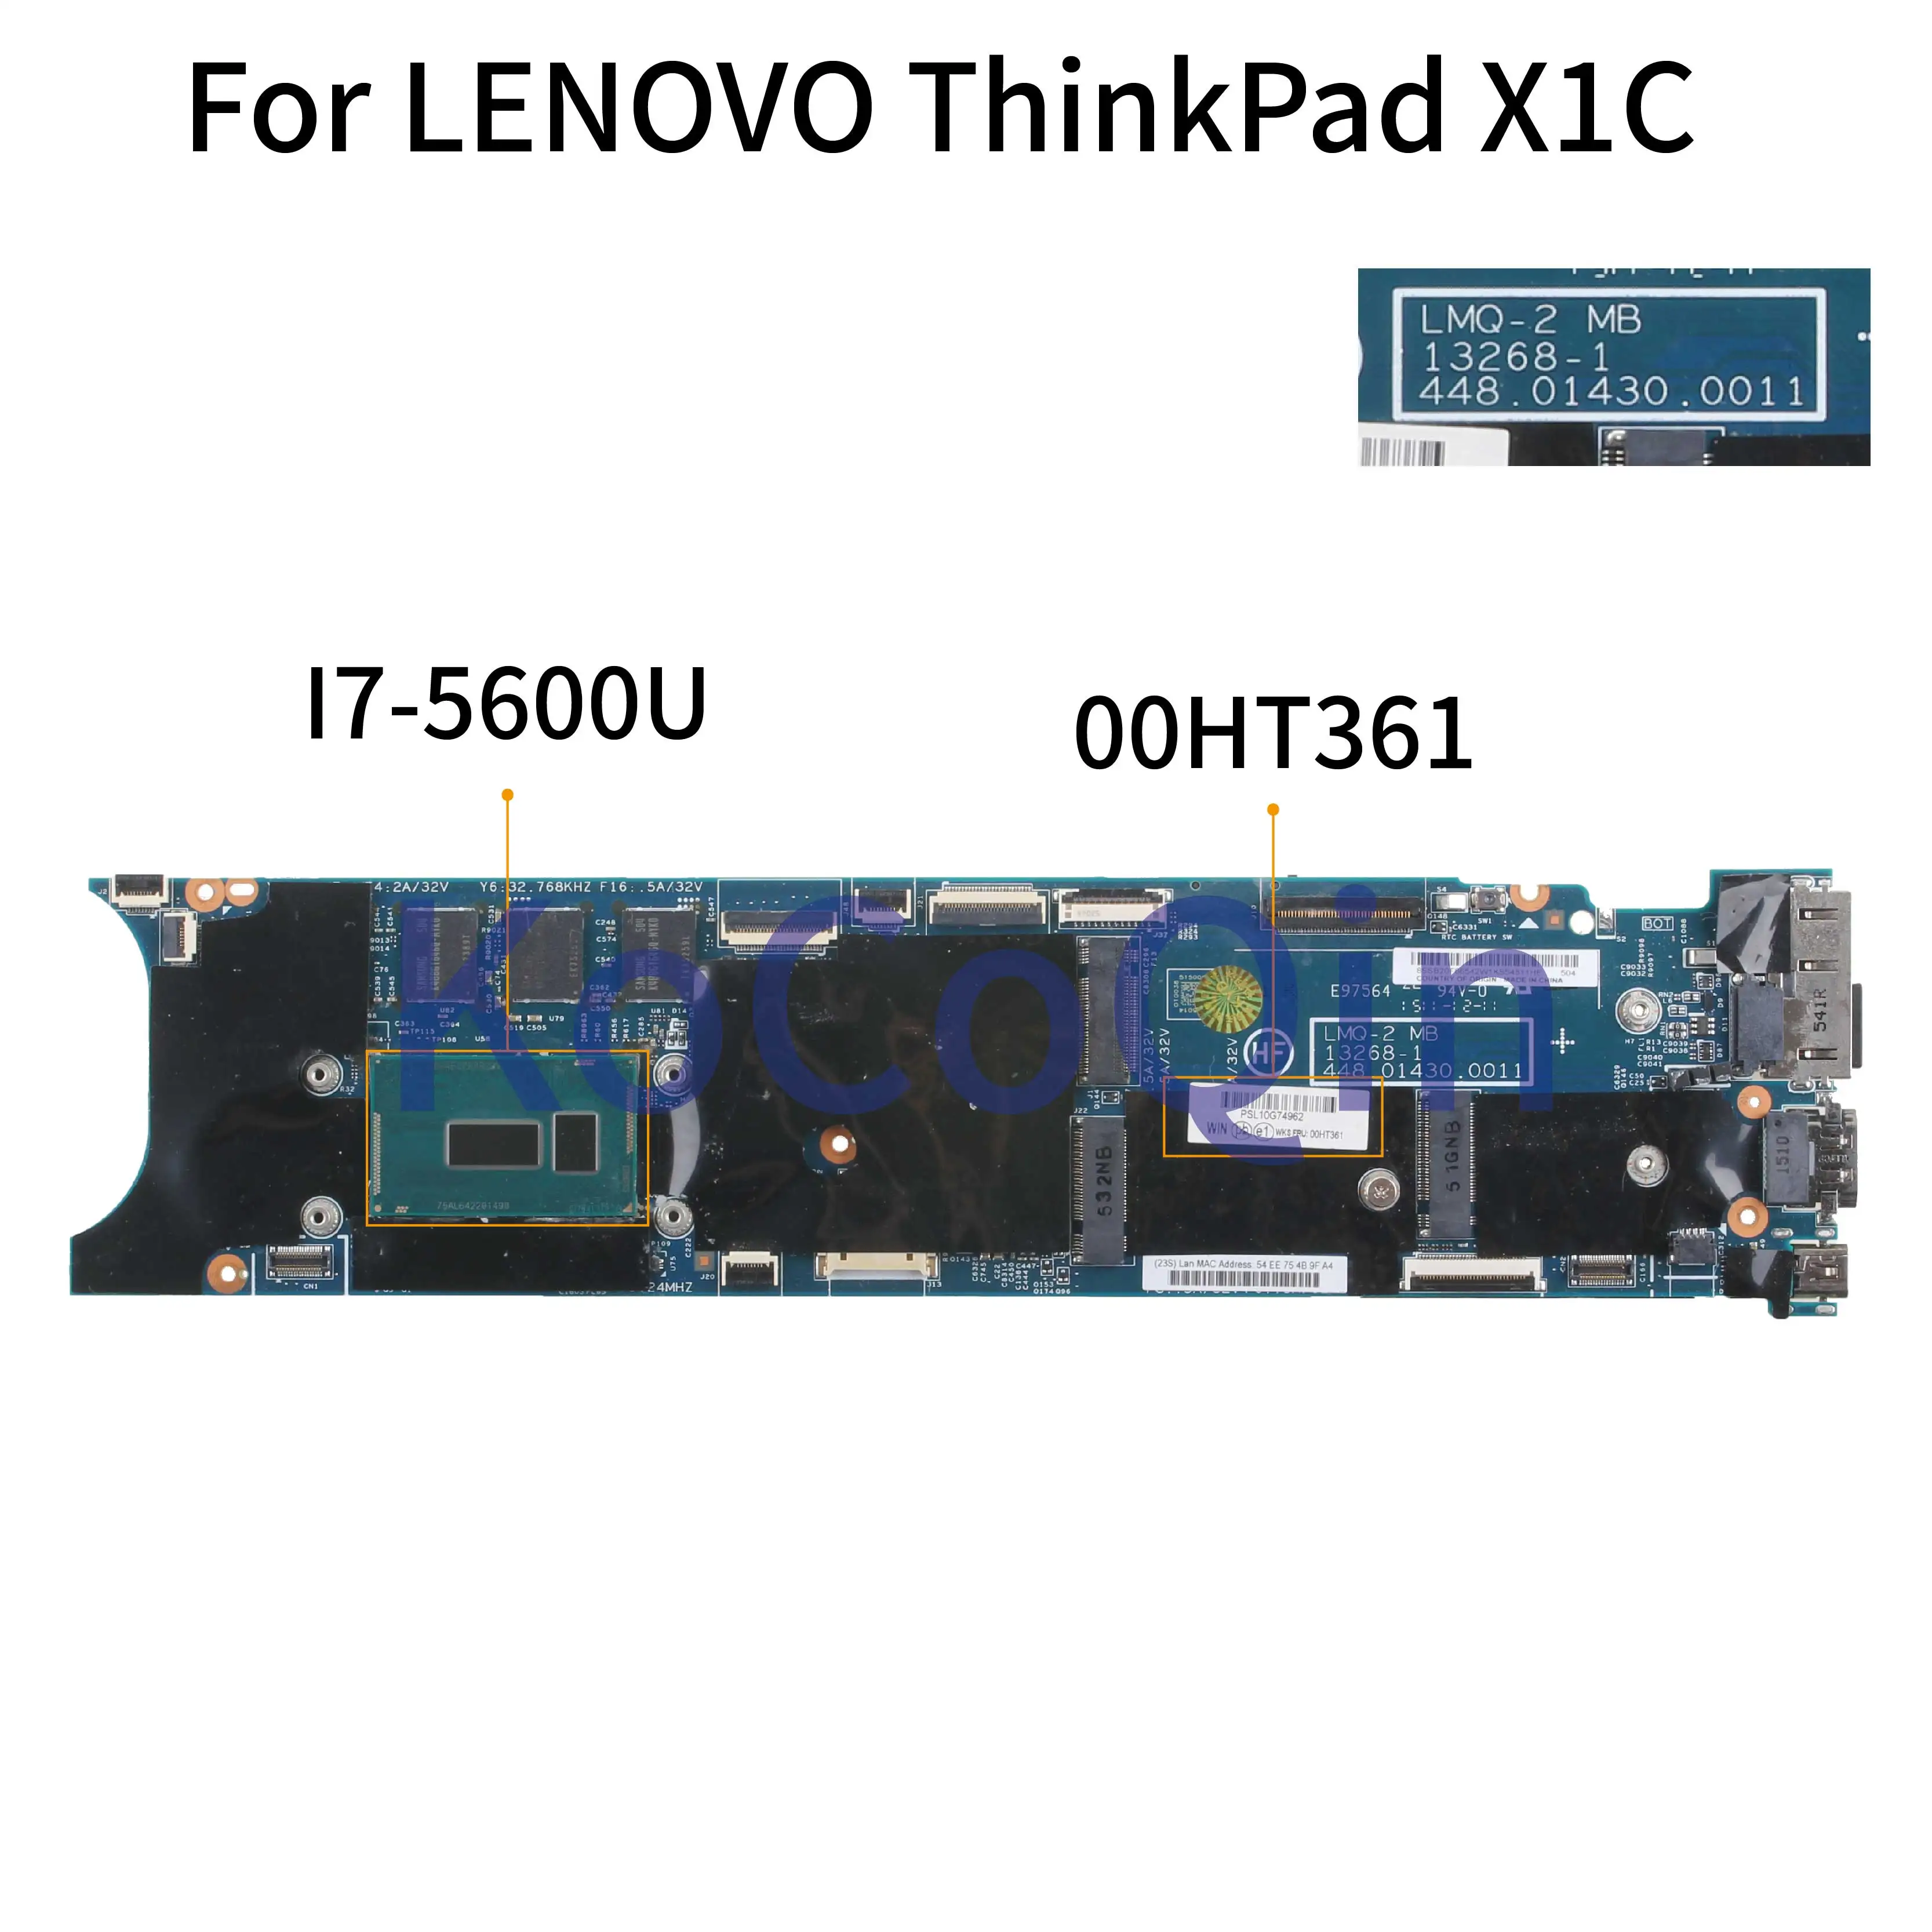 

00HT361 For LENOVO ThinkPad X1 Carbon X1C I7-5600U 8G Notebook Mainboard 13268-1 448.01430.0011 SR23V CPU Laptop Motherboard